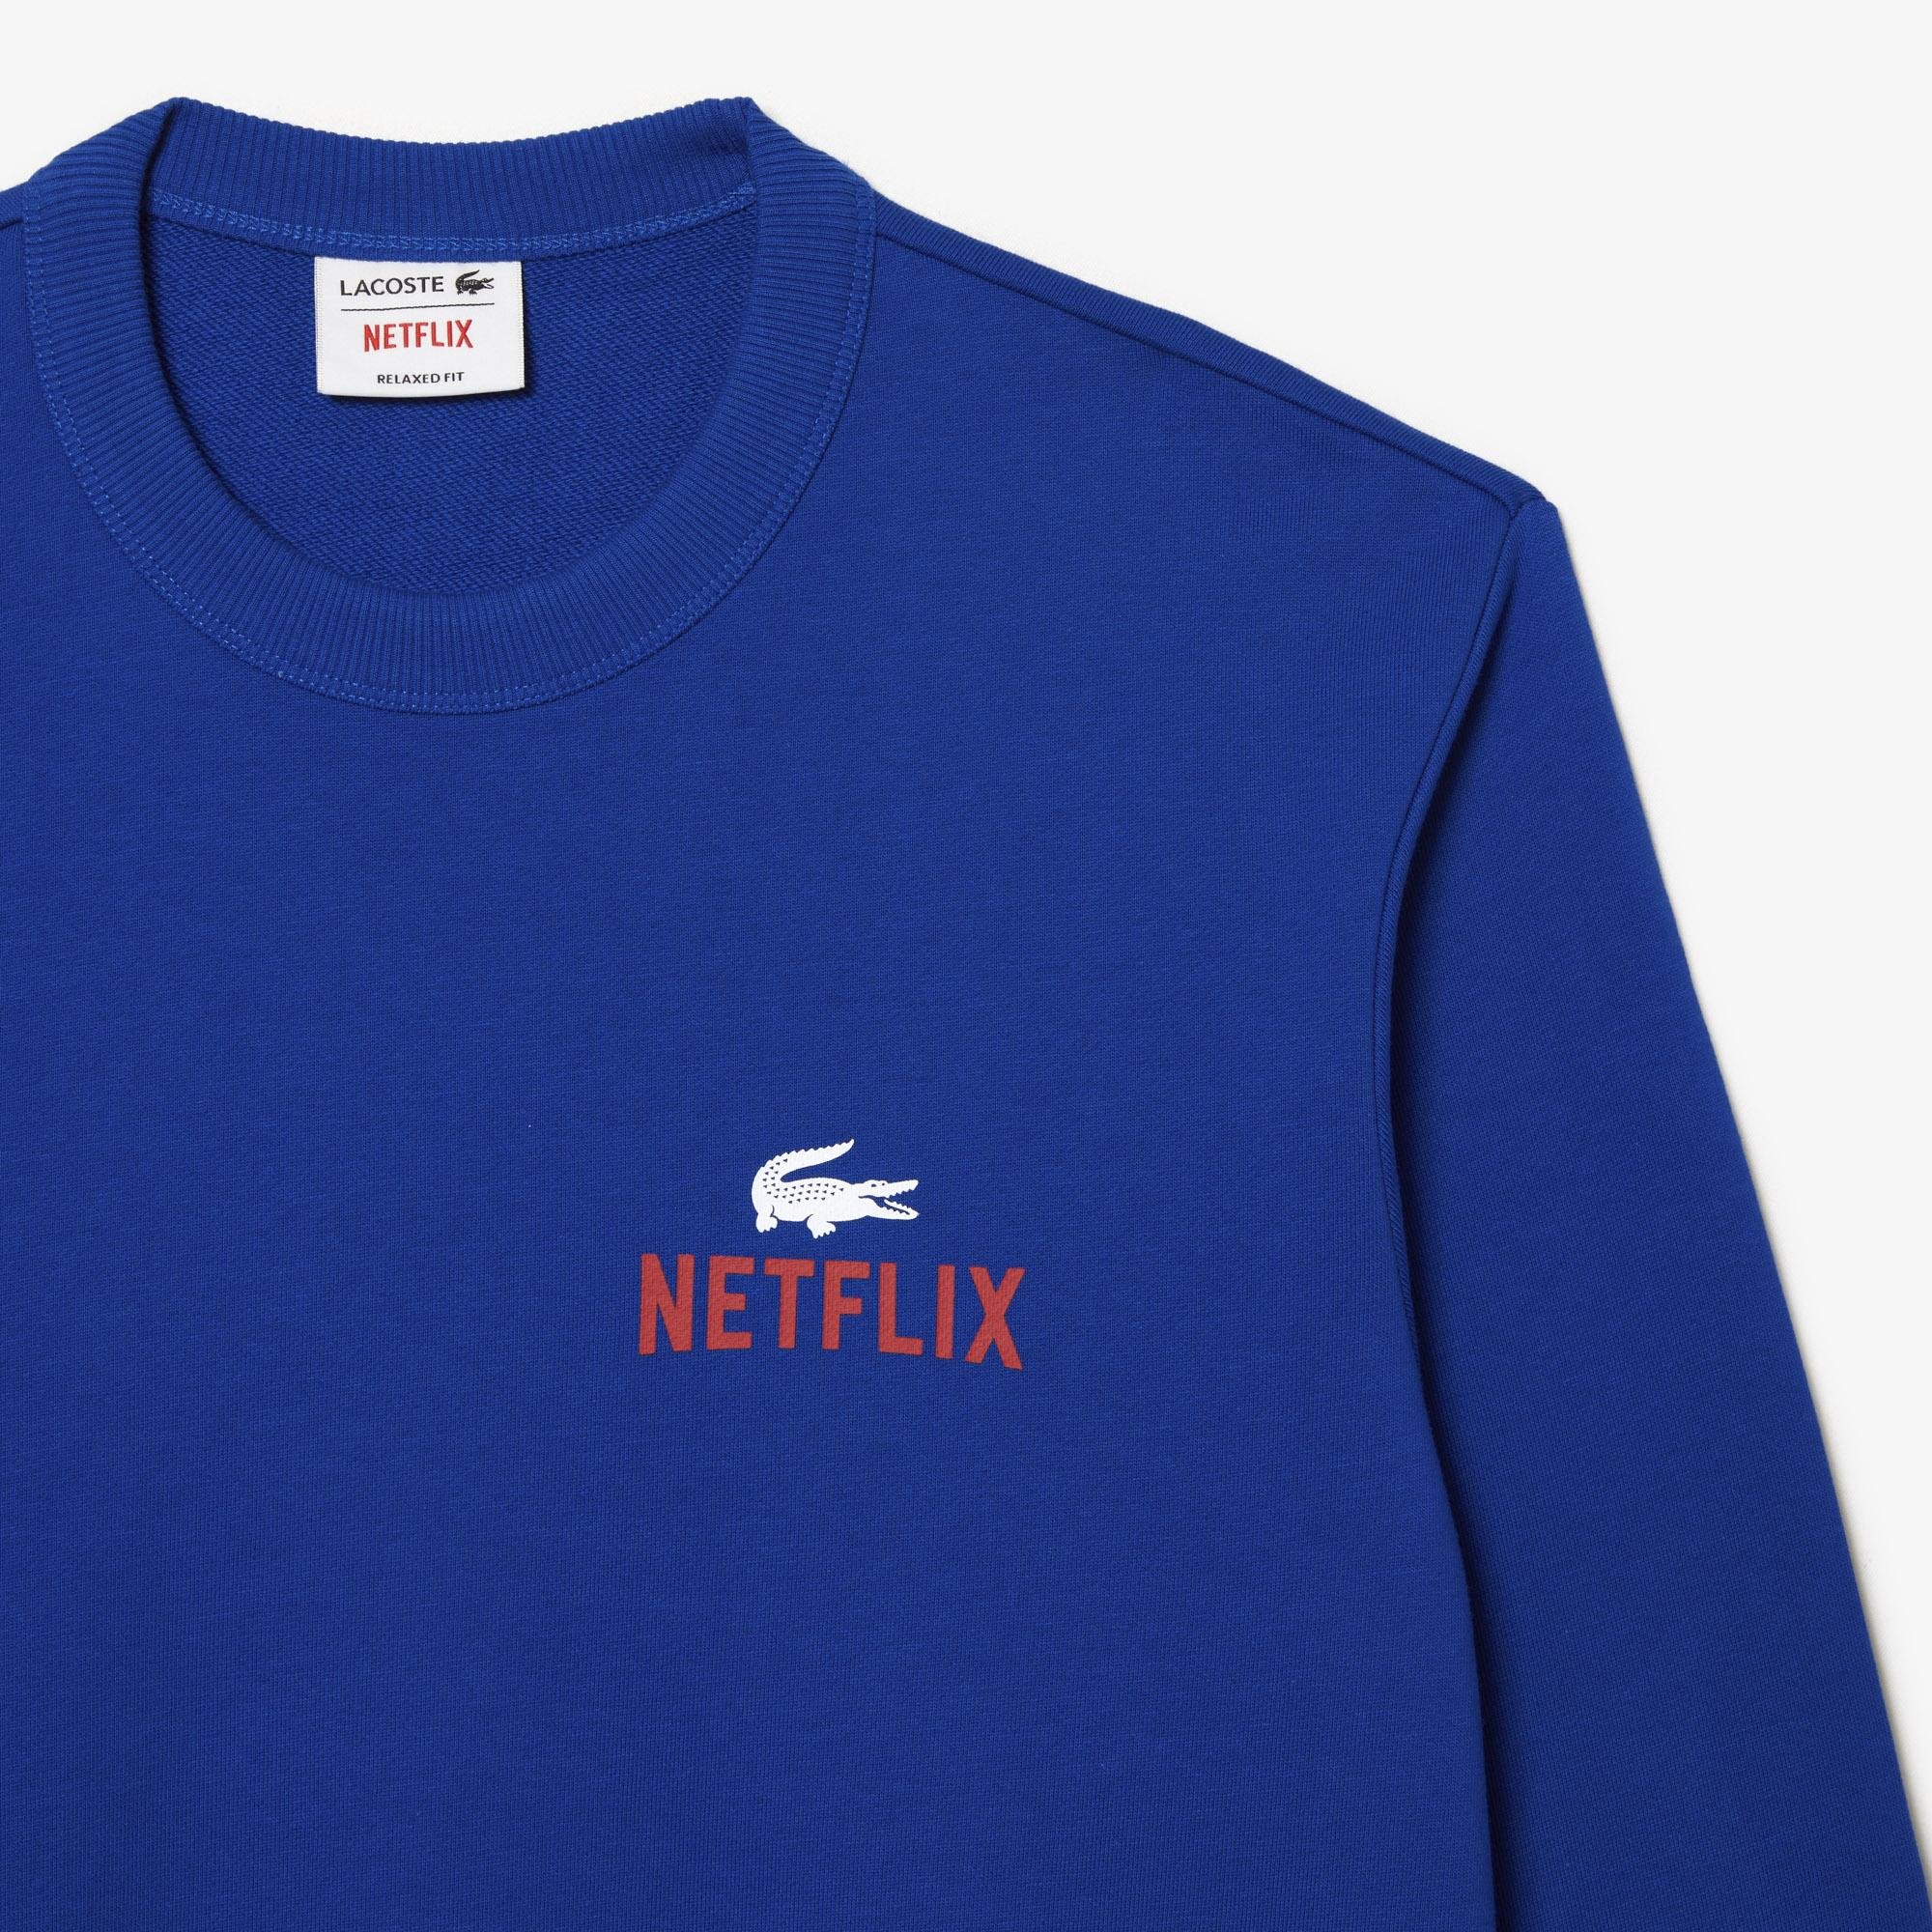 Lacoste x Netflix Unisex Regular Fit Bisiklet Yaka Baskılı Mavi Sweatshirt. 7